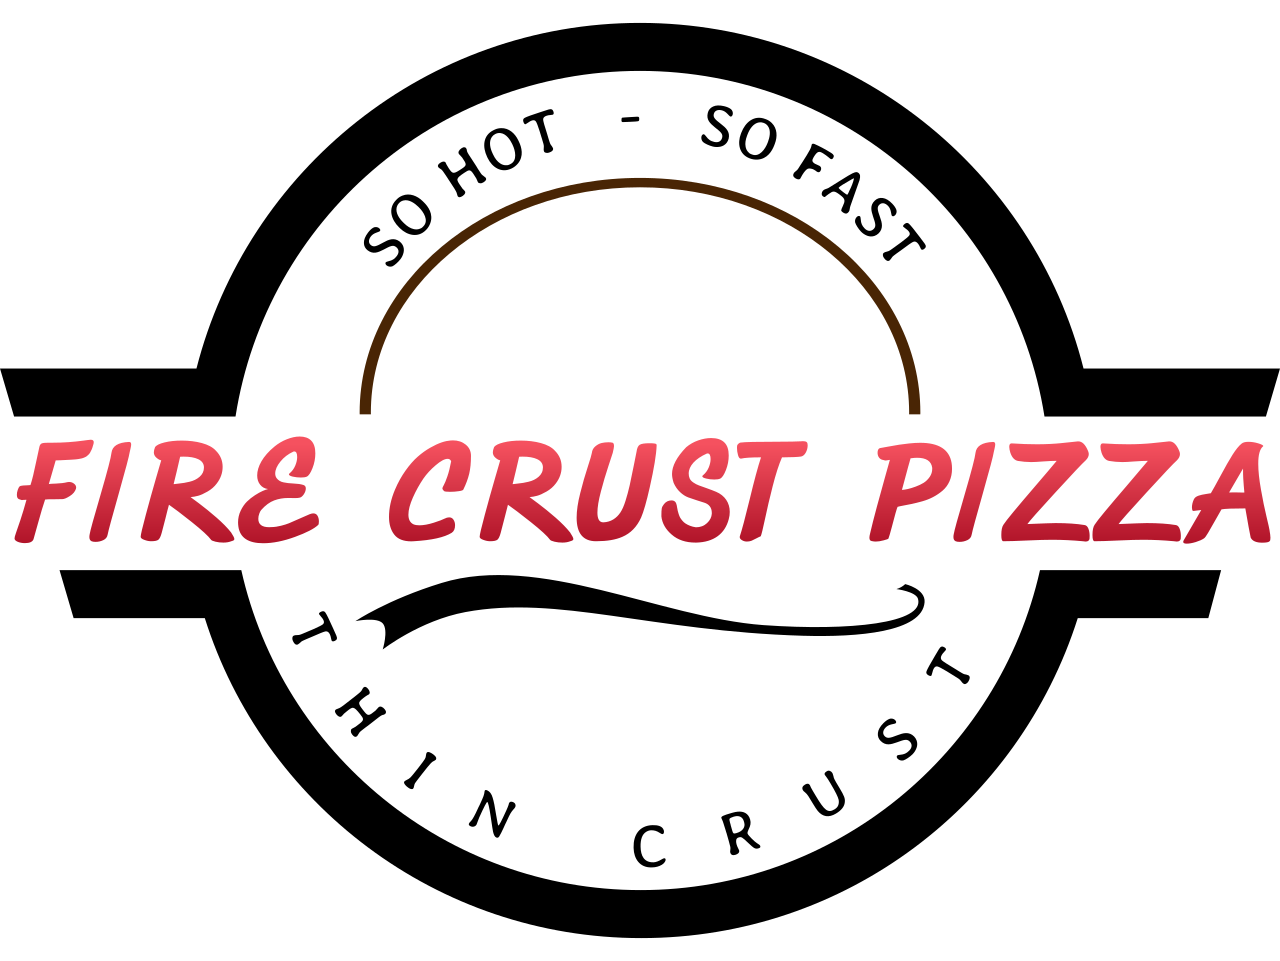 Fire crust pizza's logo